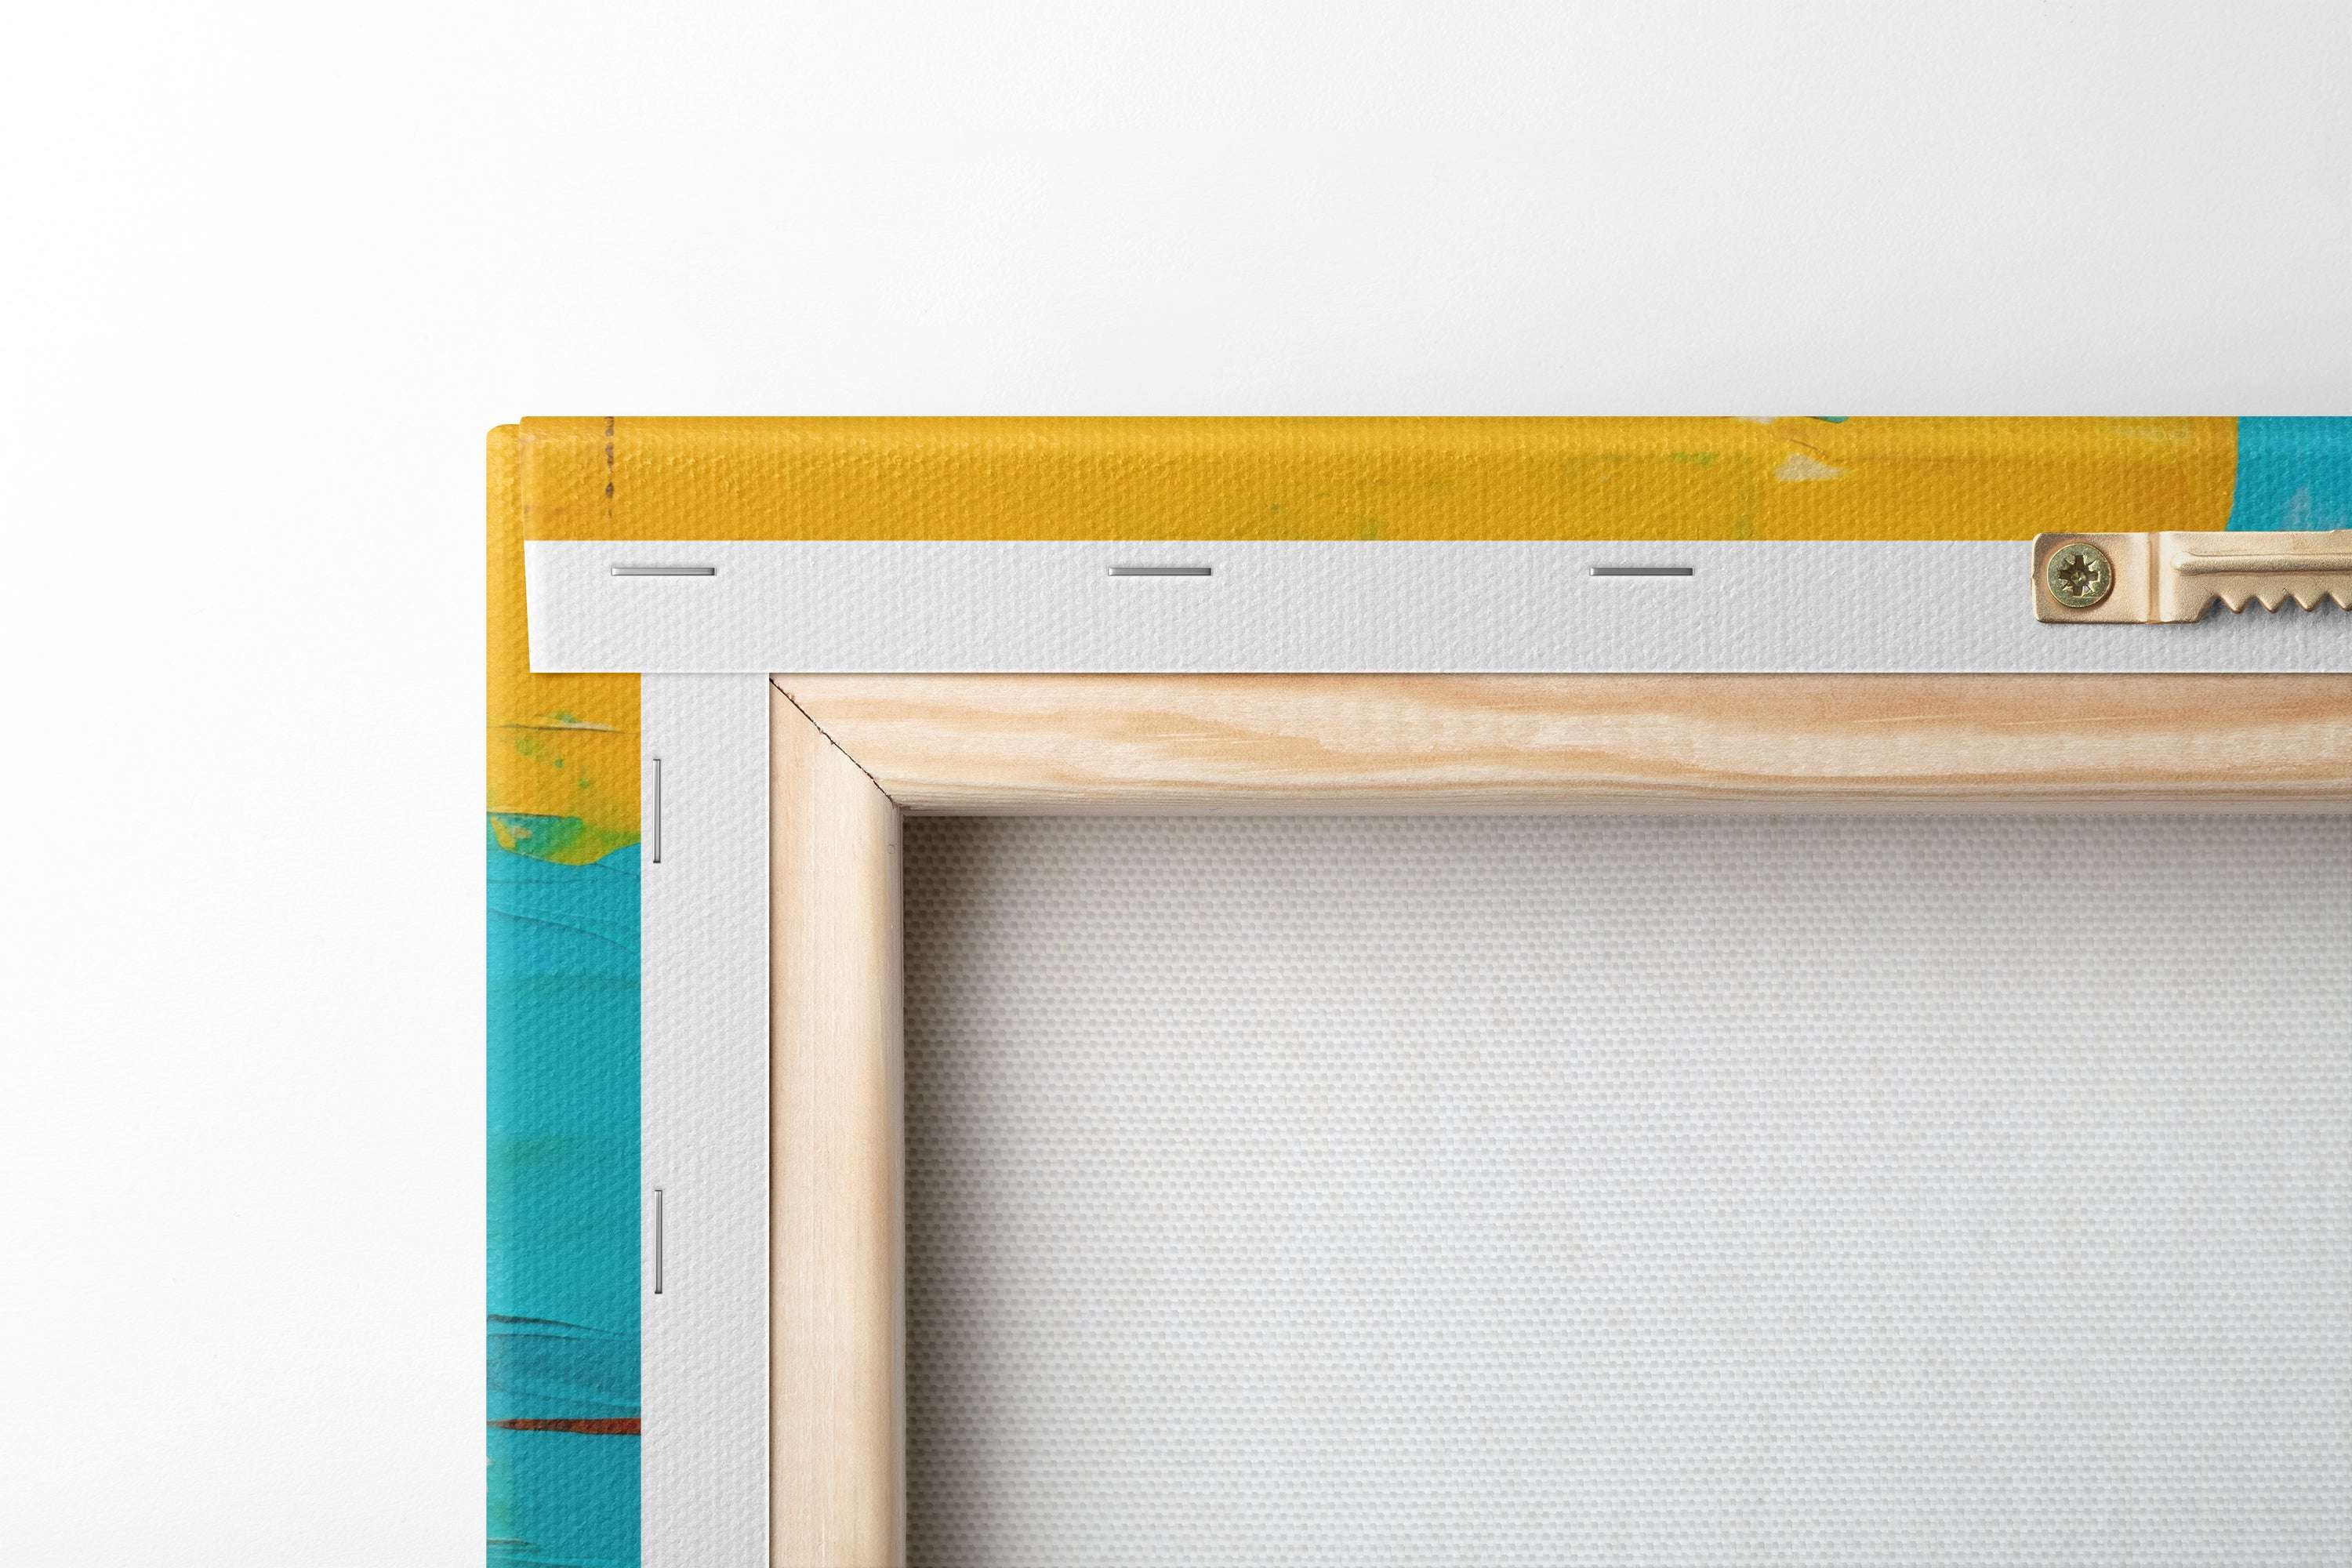 Aquamarine and Canary Yellow Vibrant - Canvas Print - Artoholica Ready to Hang Canvas Print